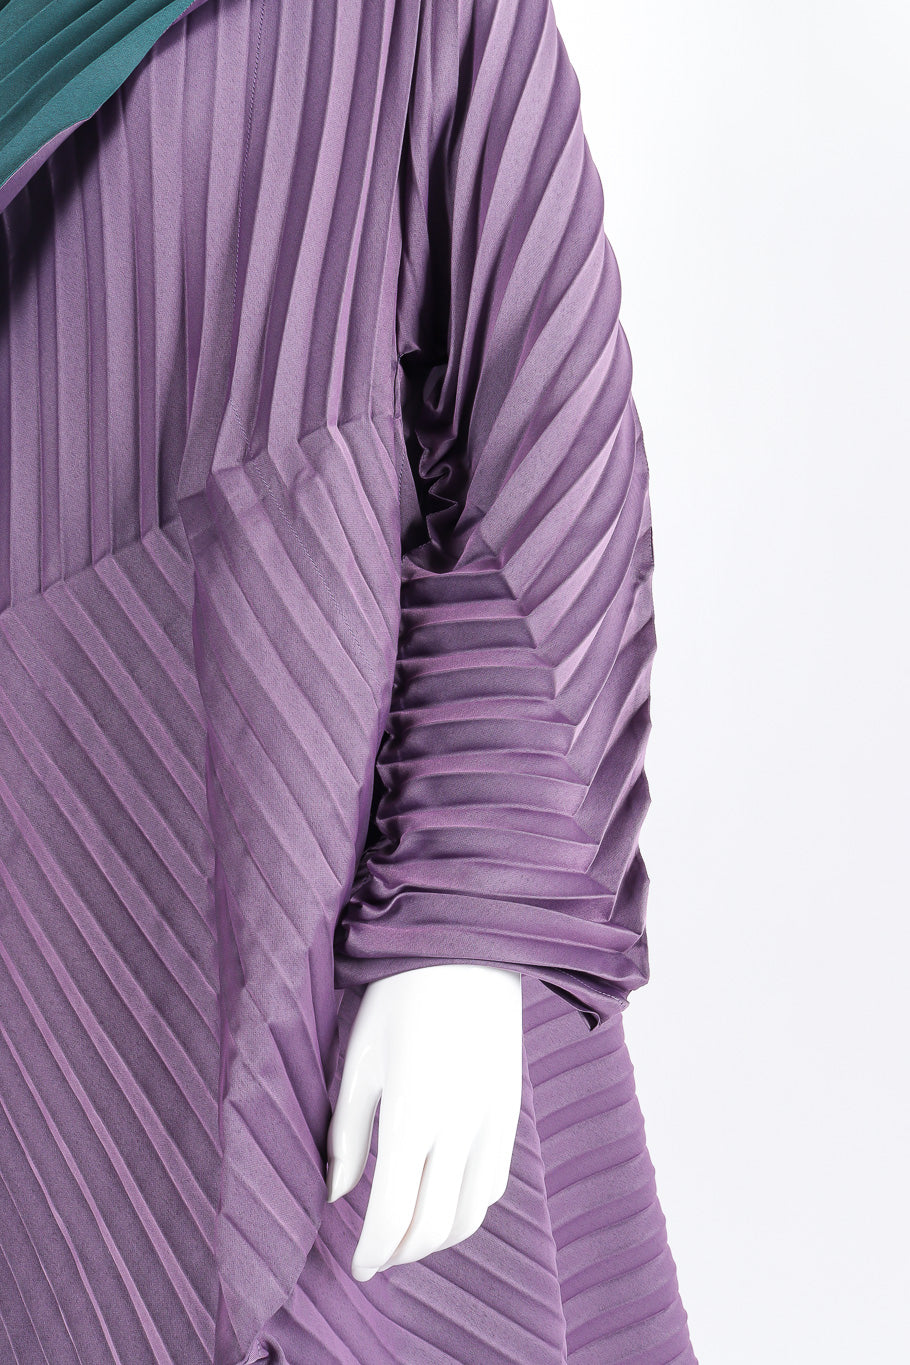 Pleated Issey Miyake Contrast Coat on Sleeve Detail @recessla